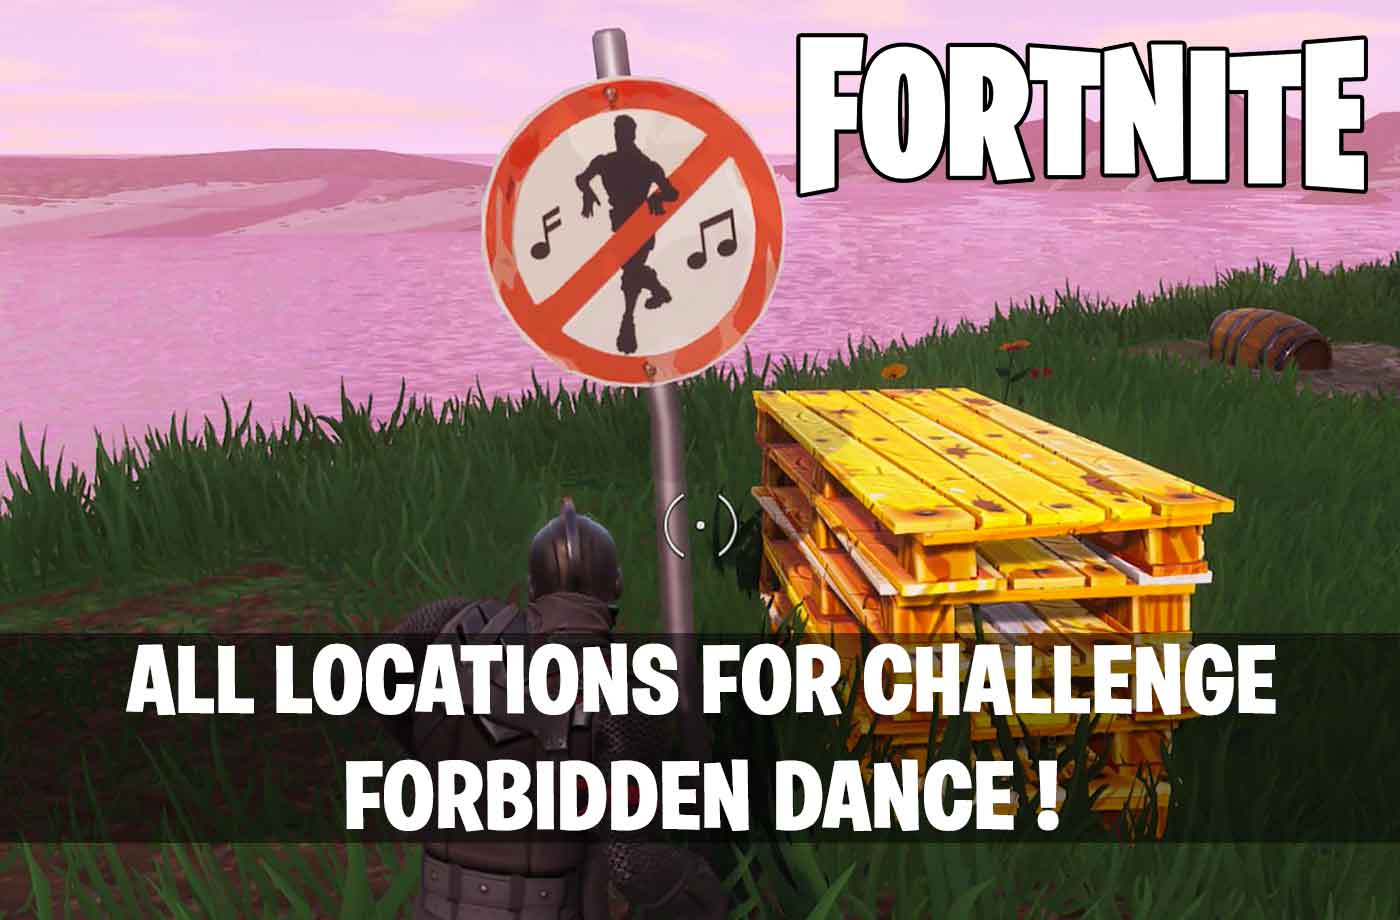 Guide Fortnite battle pass challenge week 2 – Dance in ... - 1400 x 920 jpeg 82kB